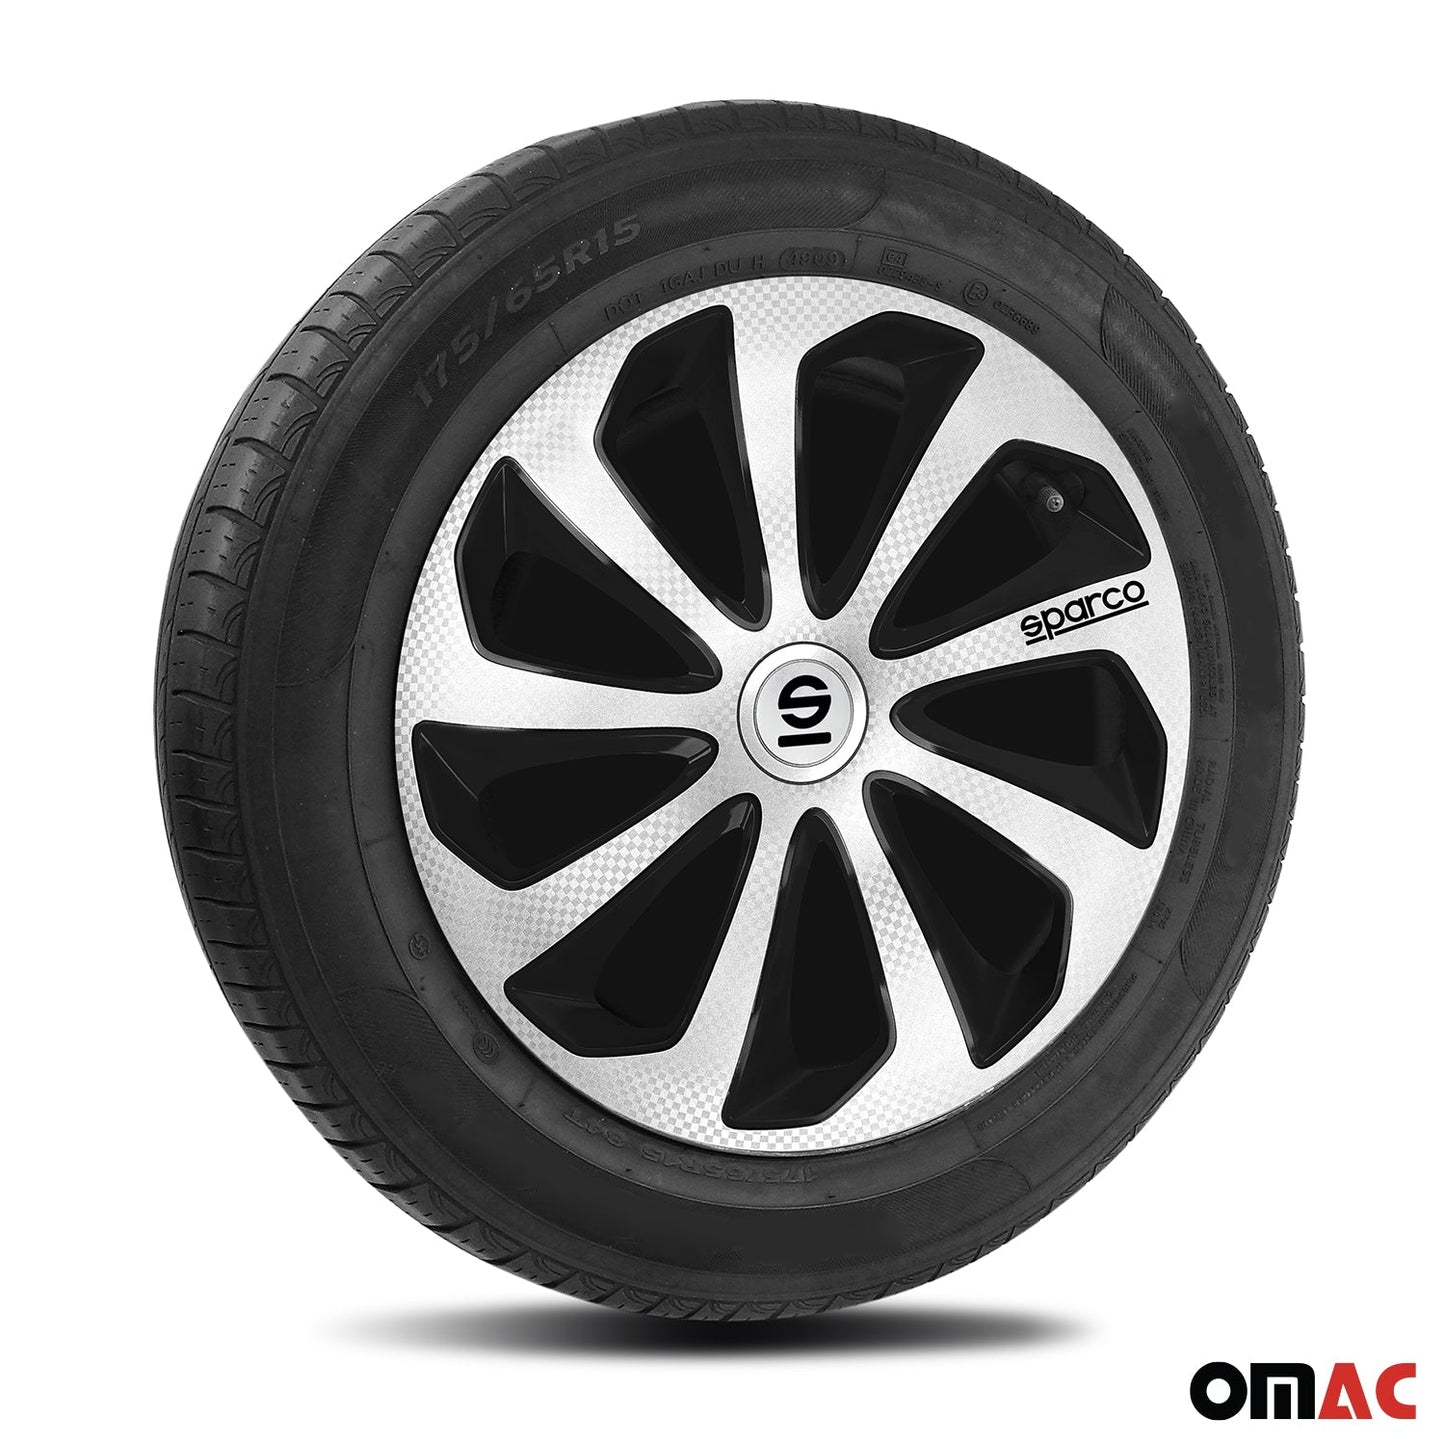 OMAC 15" Sparco Sicilia Wheel Covers Hubcaps Silver Carbon Black 4 Pcs 96SPC1575SVBKC